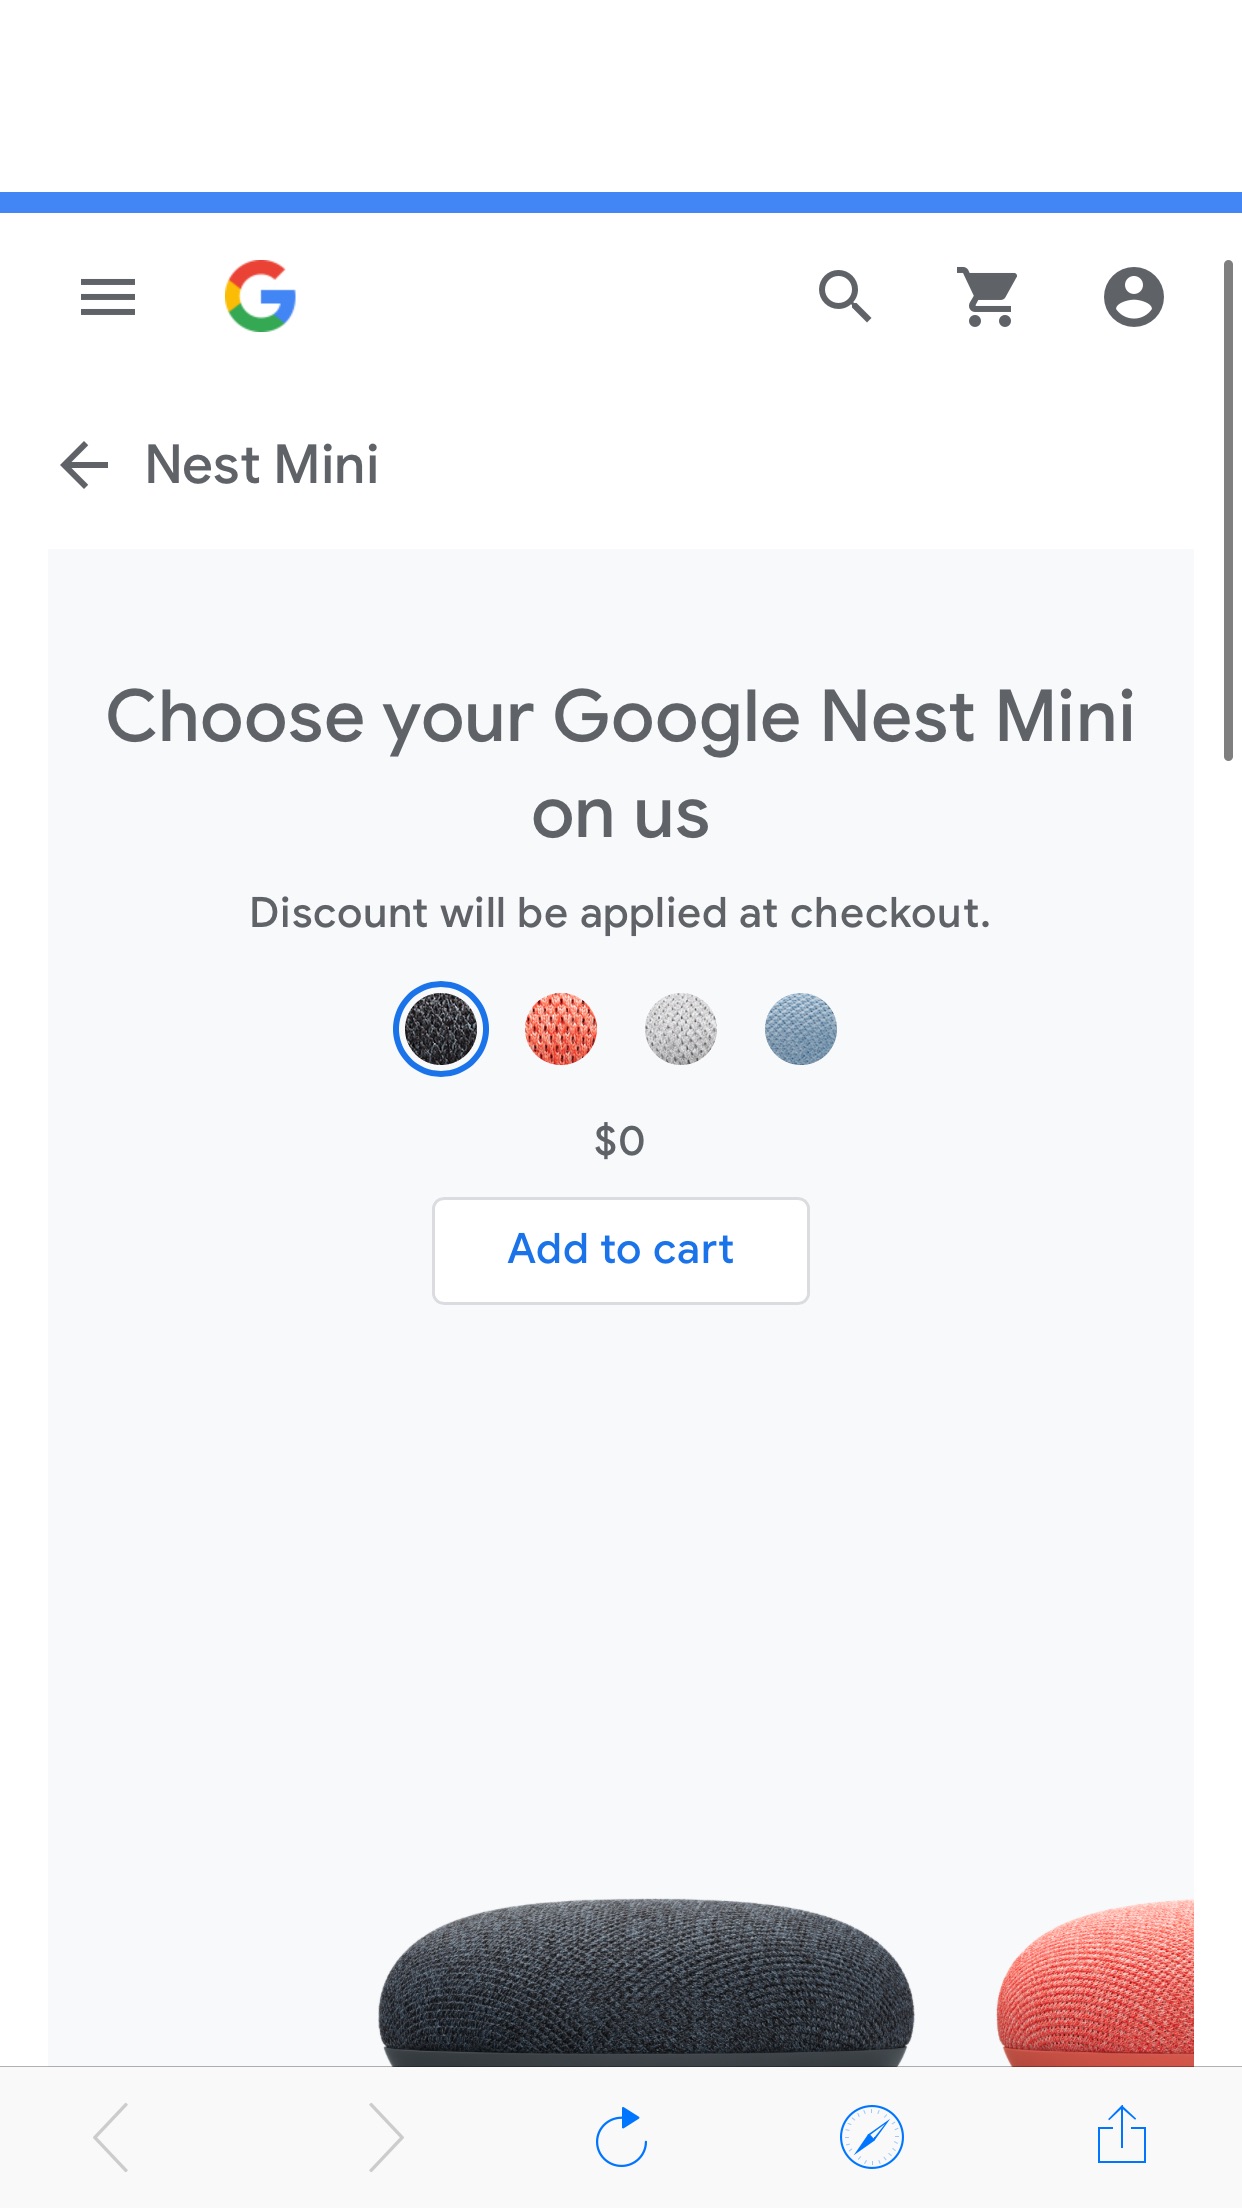 Fi group plan用户免费领Google Nest mini